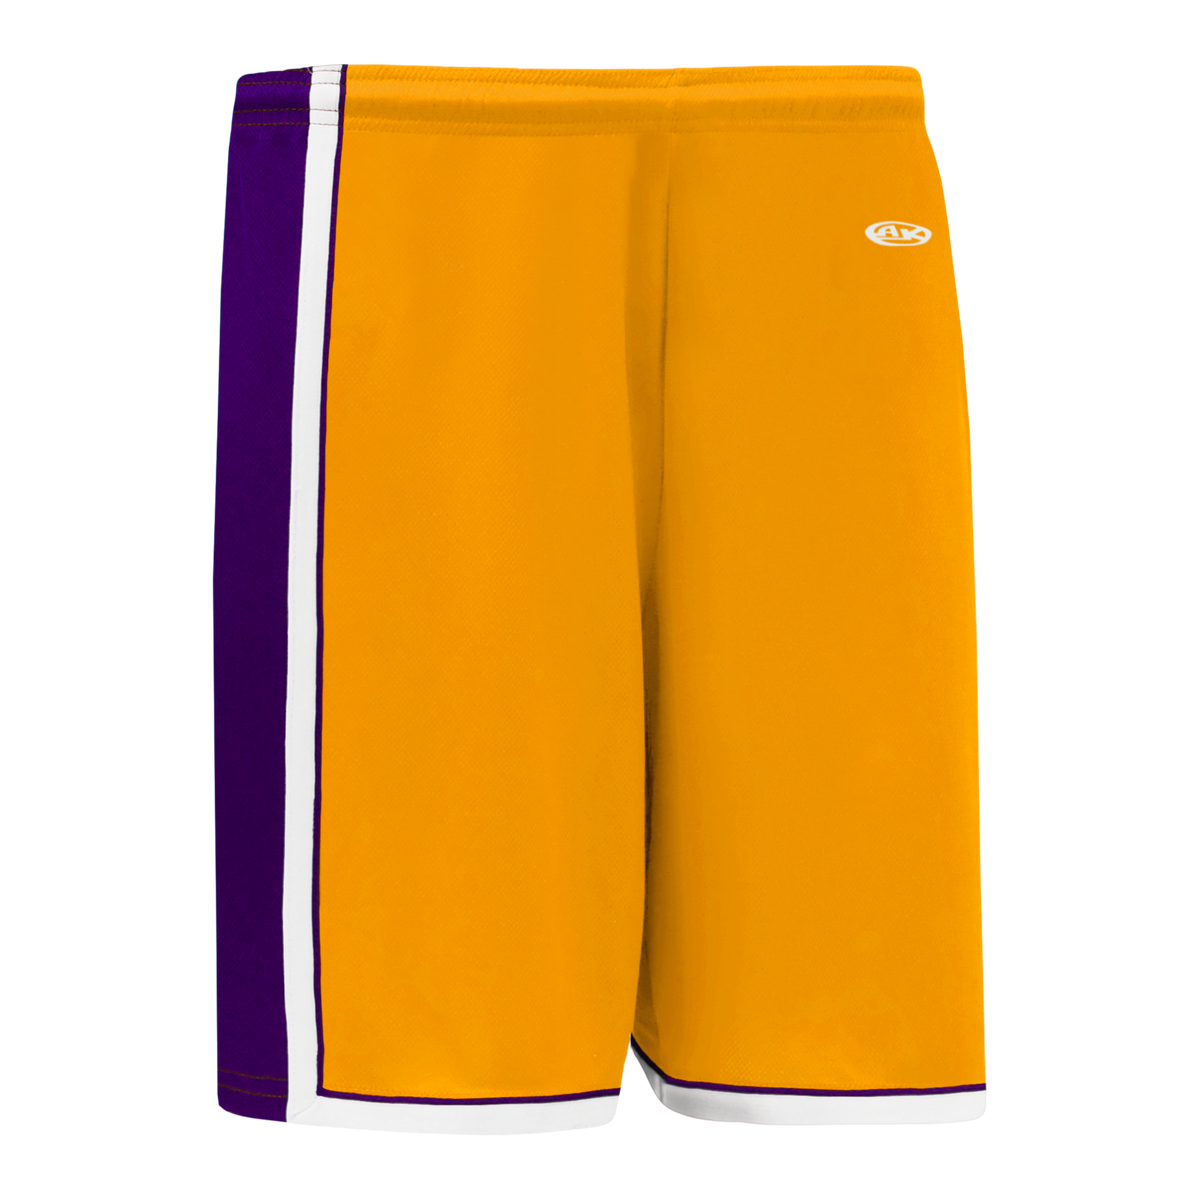 Athletic Knit (AK) BS1735Y-441 Youth LA Lakers Purple Pro